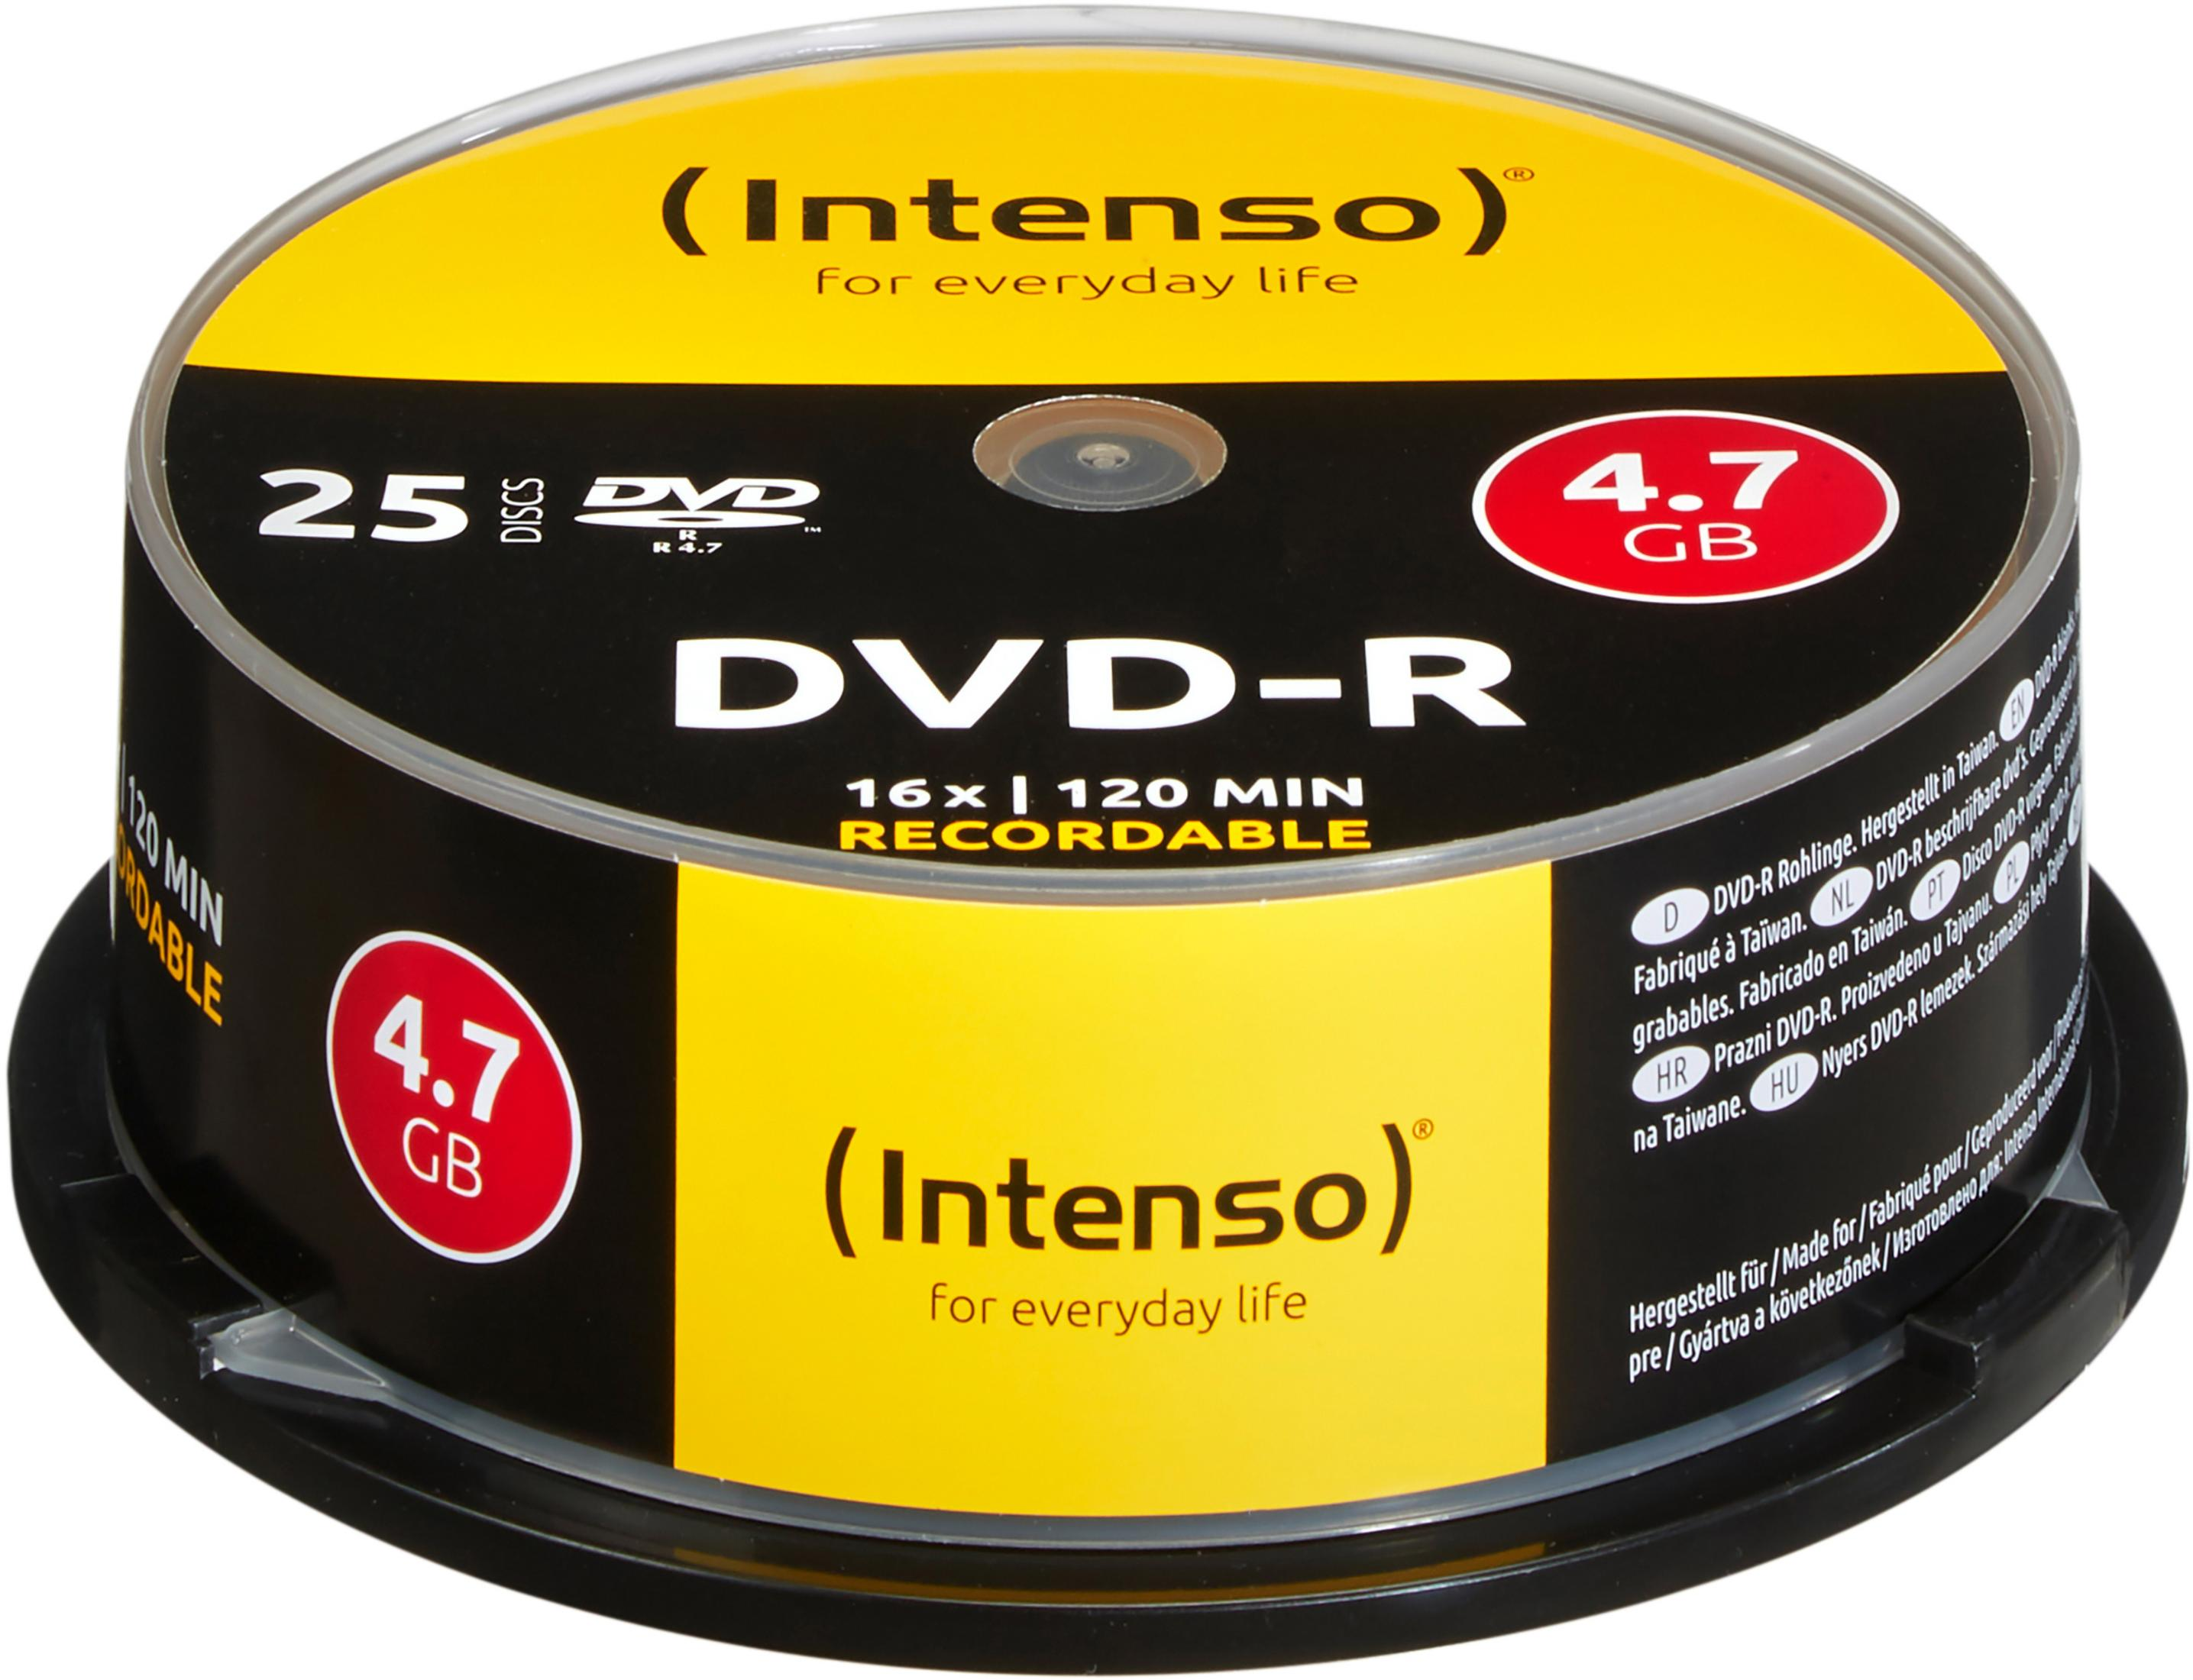 DVD-R 25ER 4,7GB INTENSO 16X DVD-R 4101154 SP Rohlinge